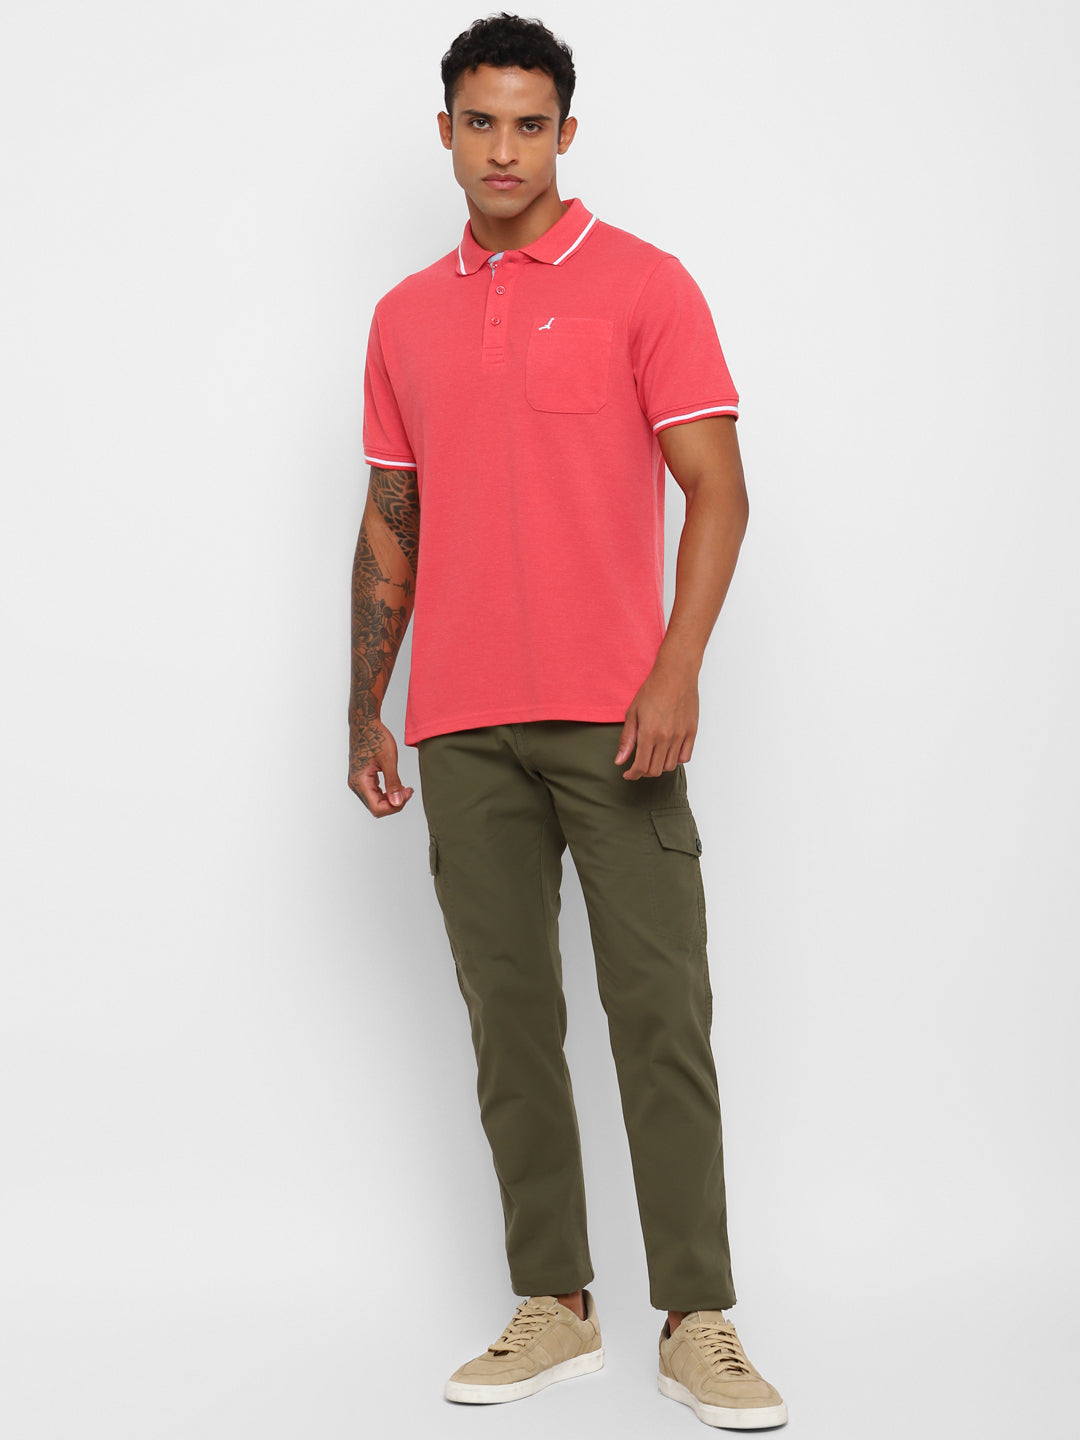 Polo Collar T-Shirt for Men with Pocket - Red Orange Melange